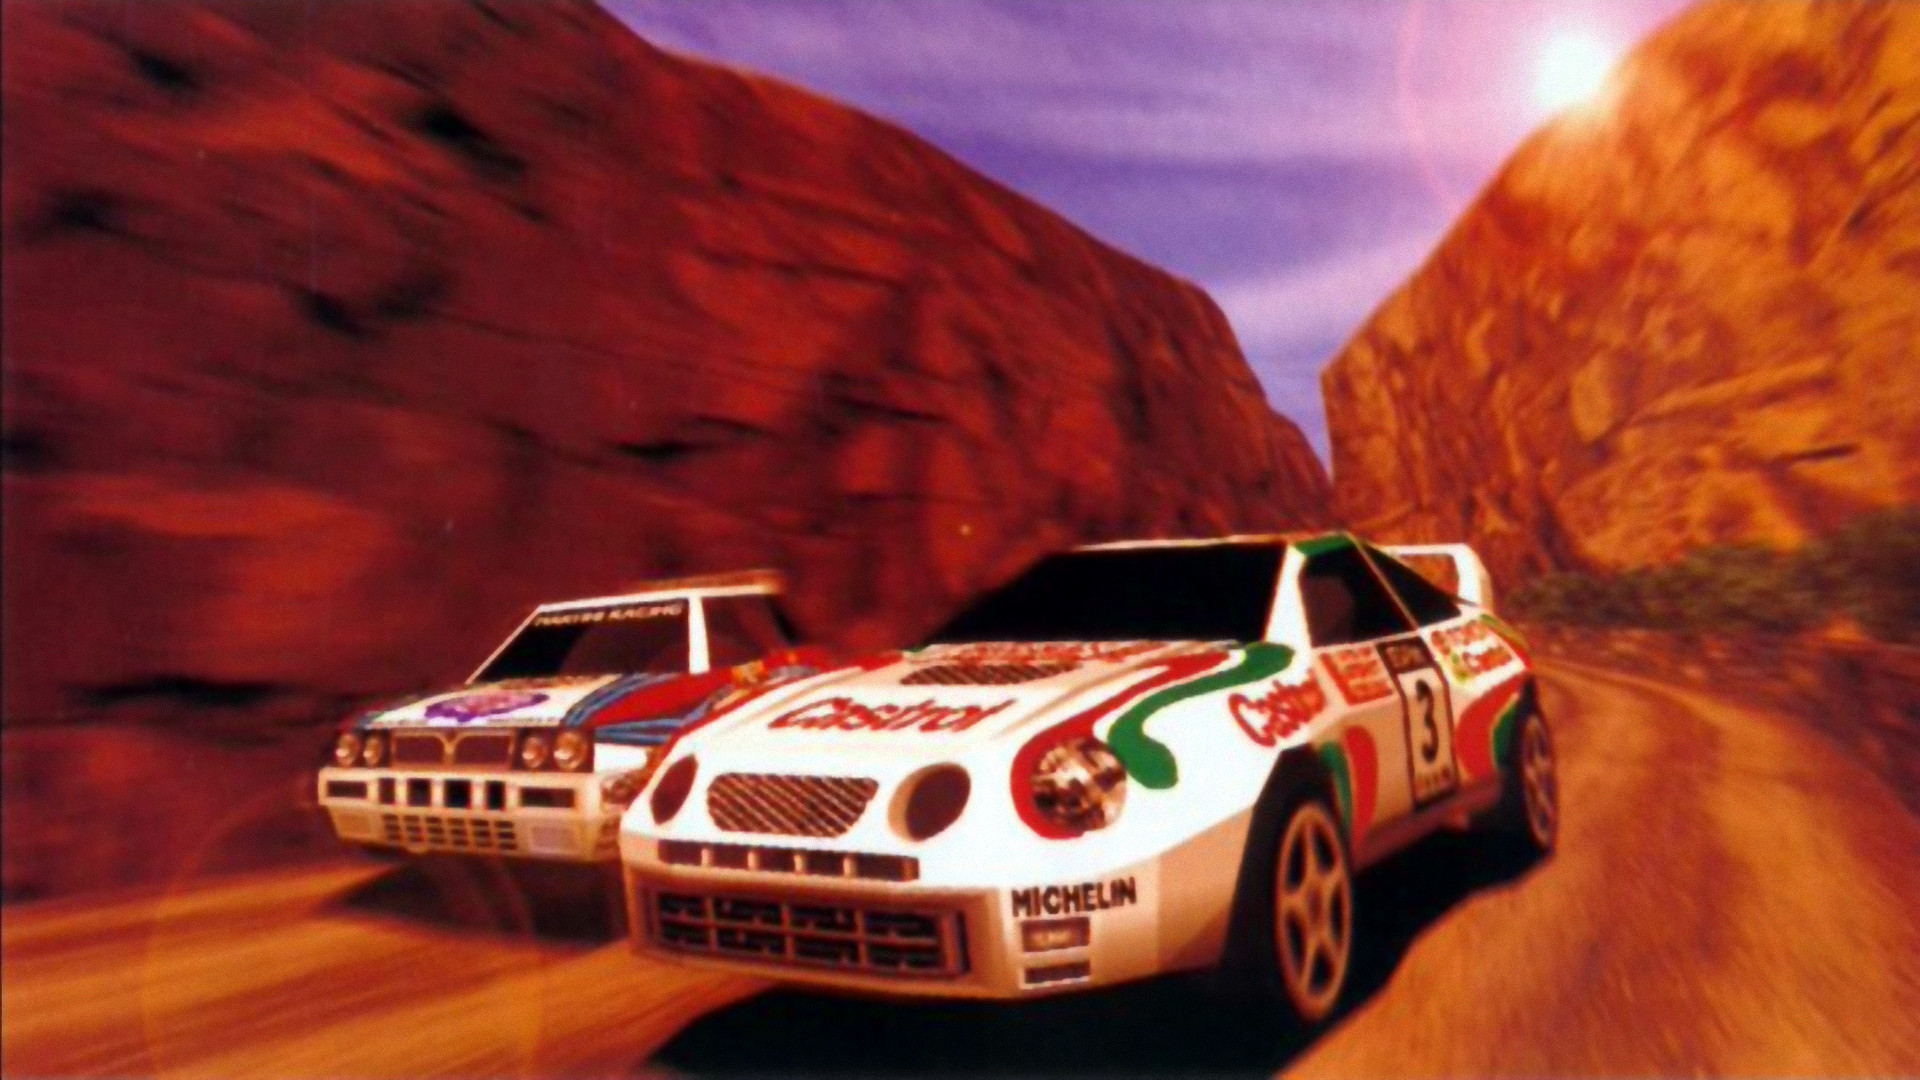 Sega Rally Championship: TWIN